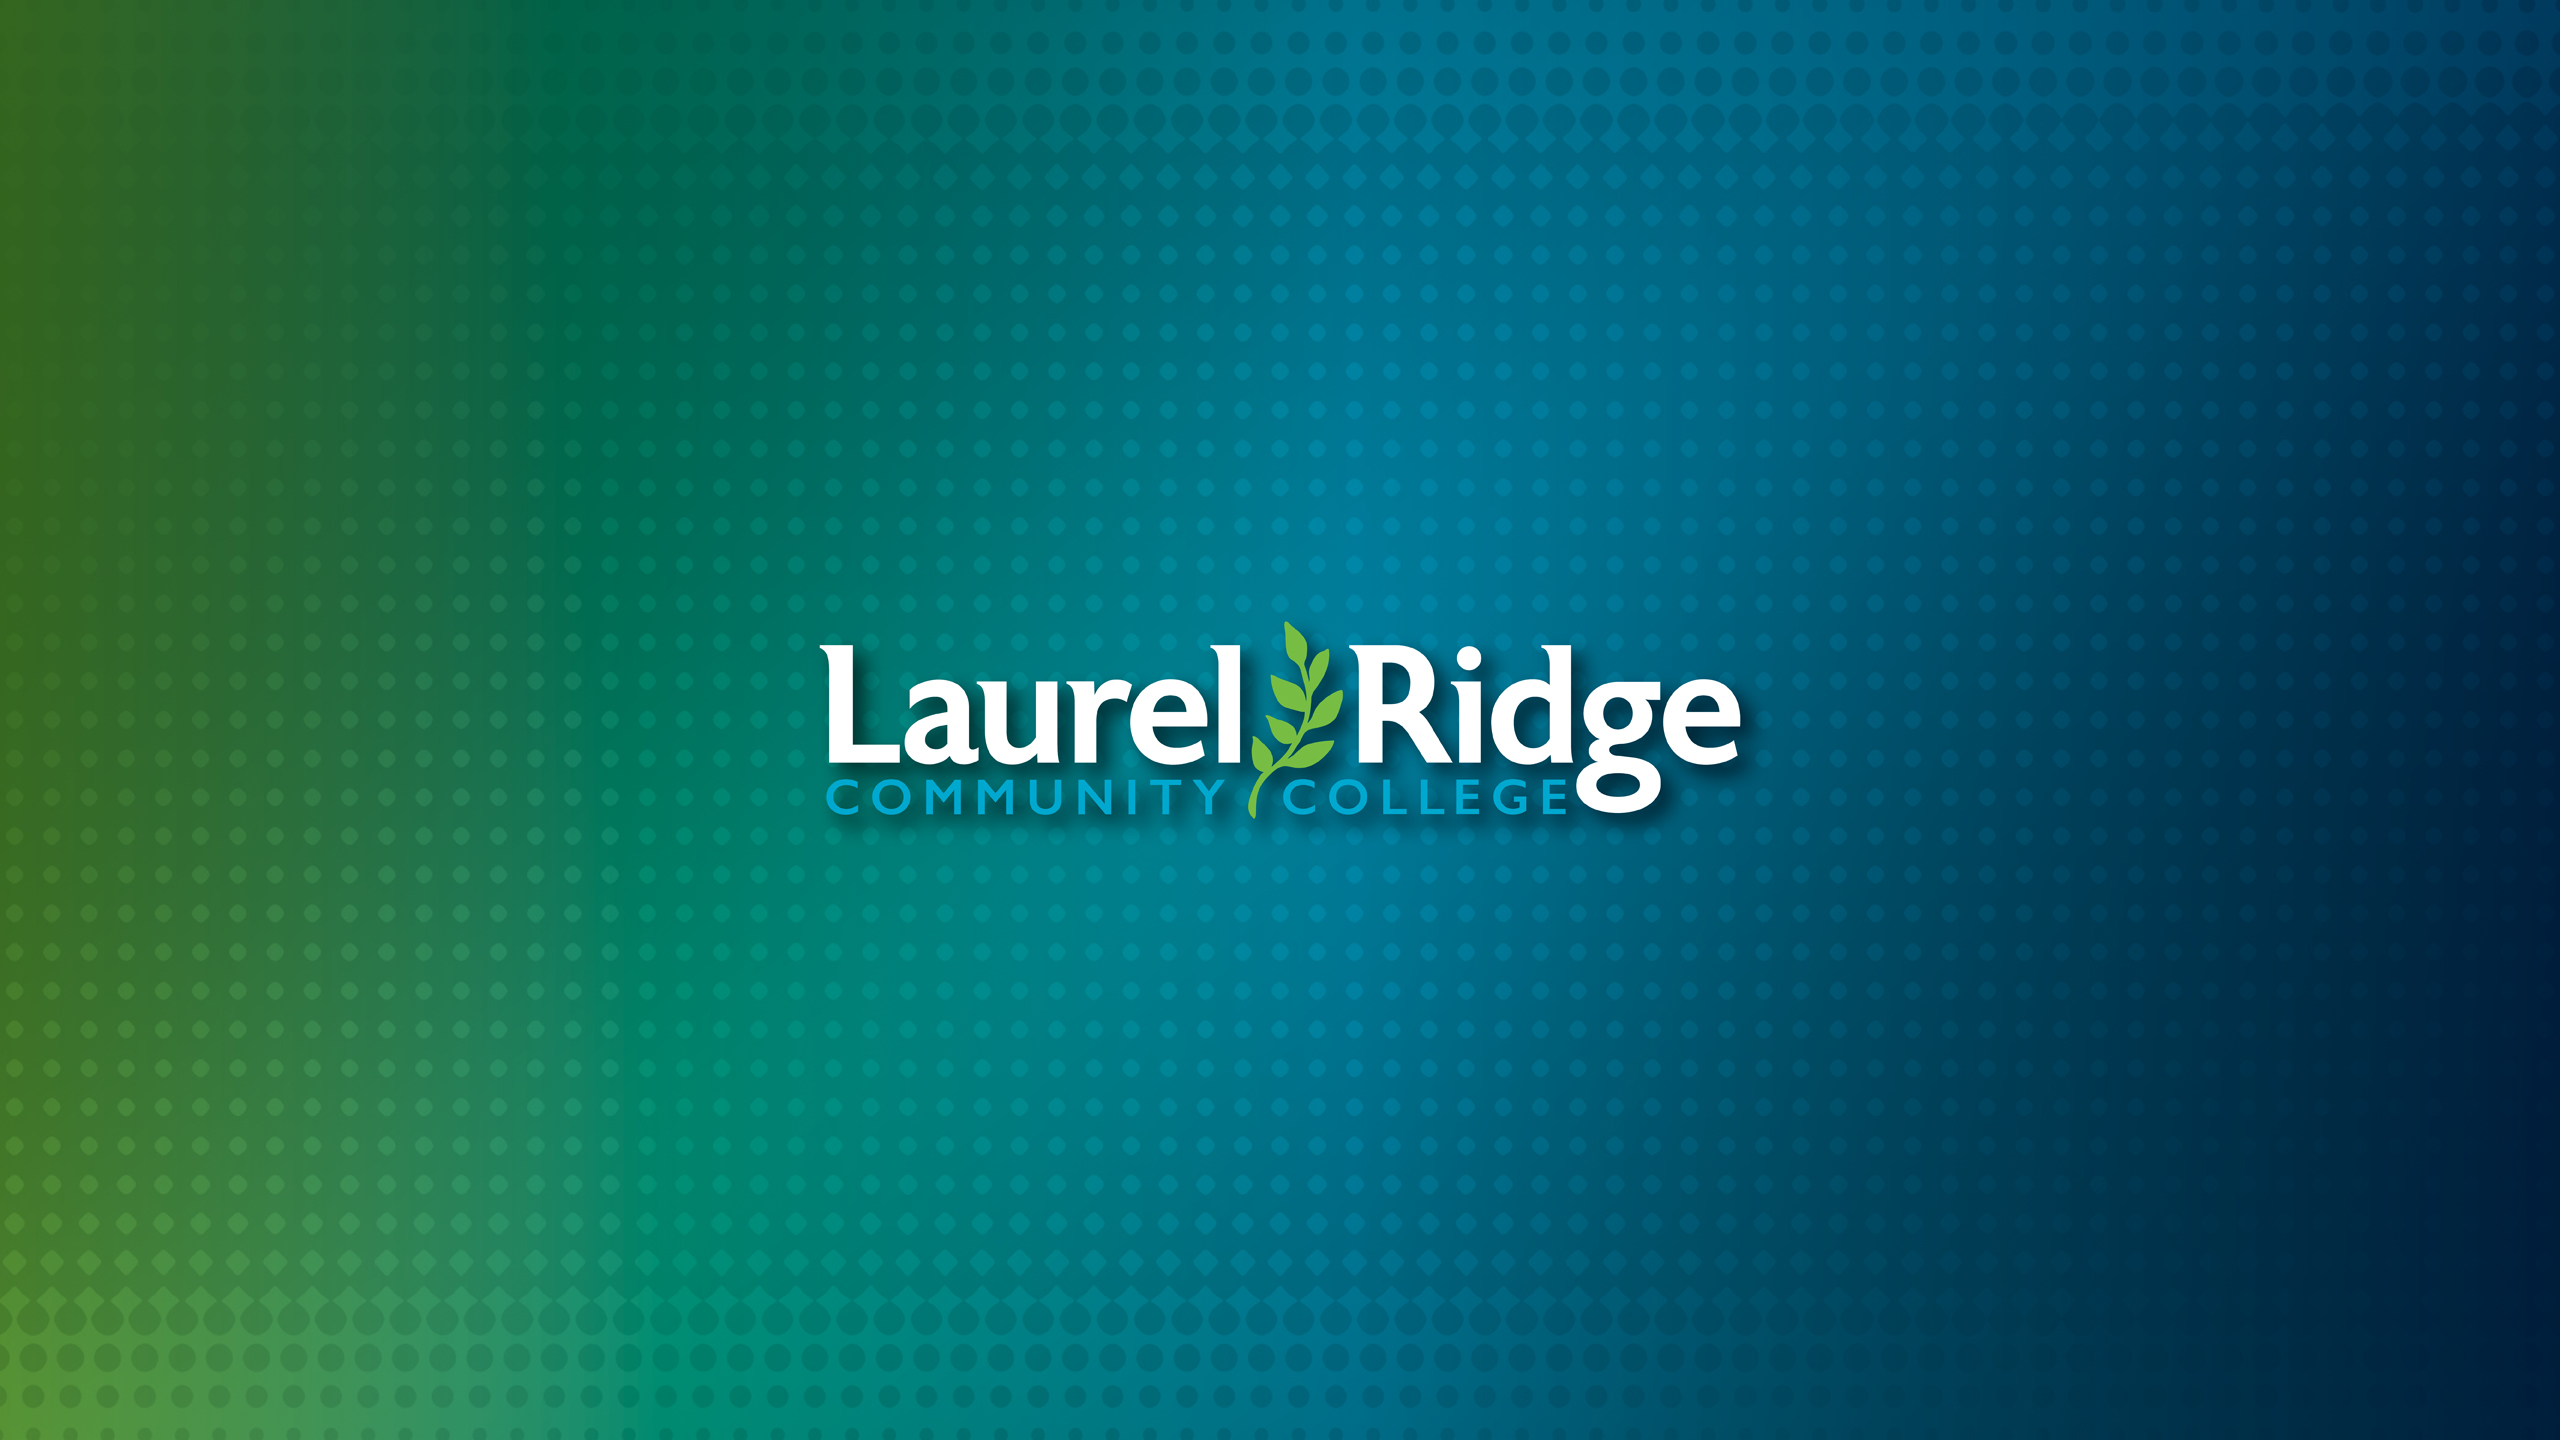 Brand And Marketing Resources Laurel Ridge Munity College